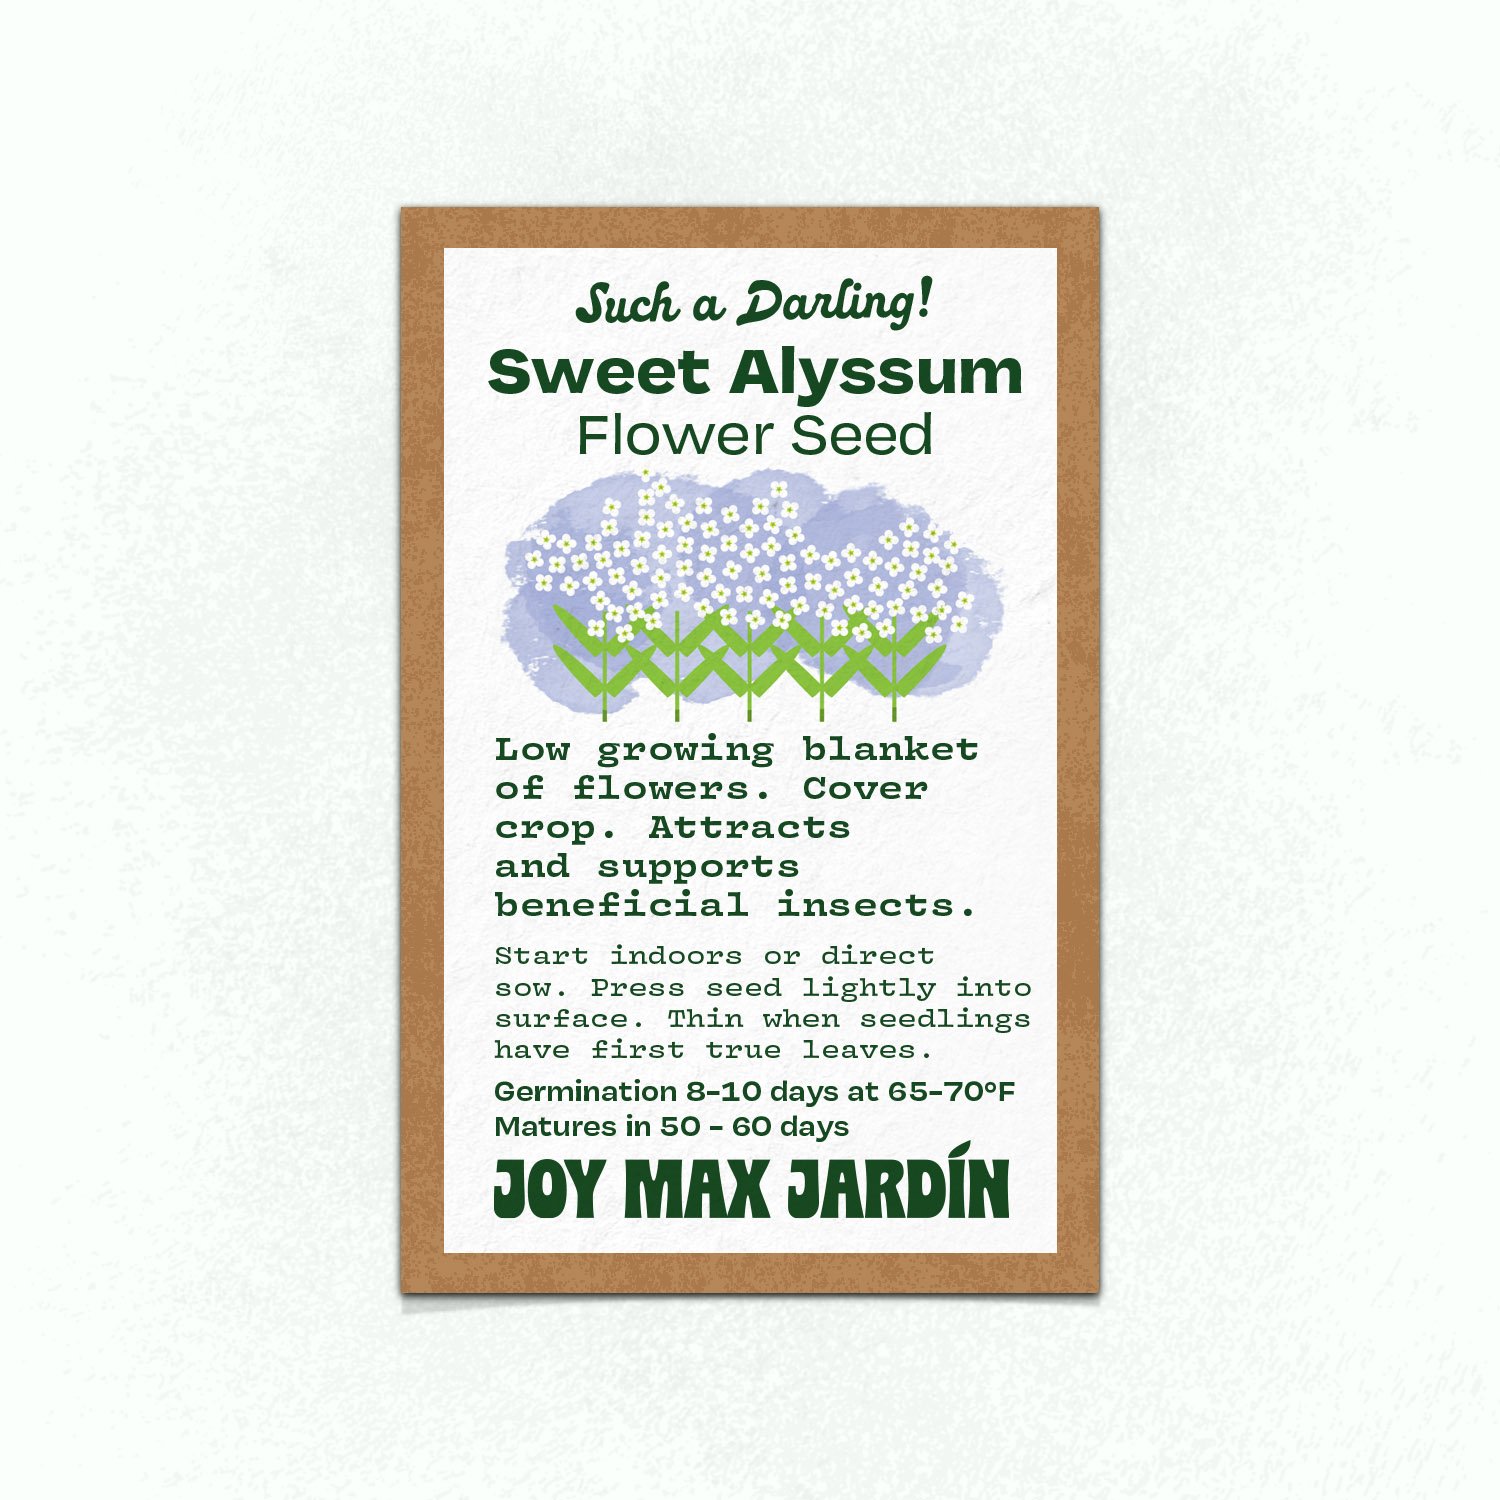 Joy Max Jardin Sweet Allysum Seed.jpg